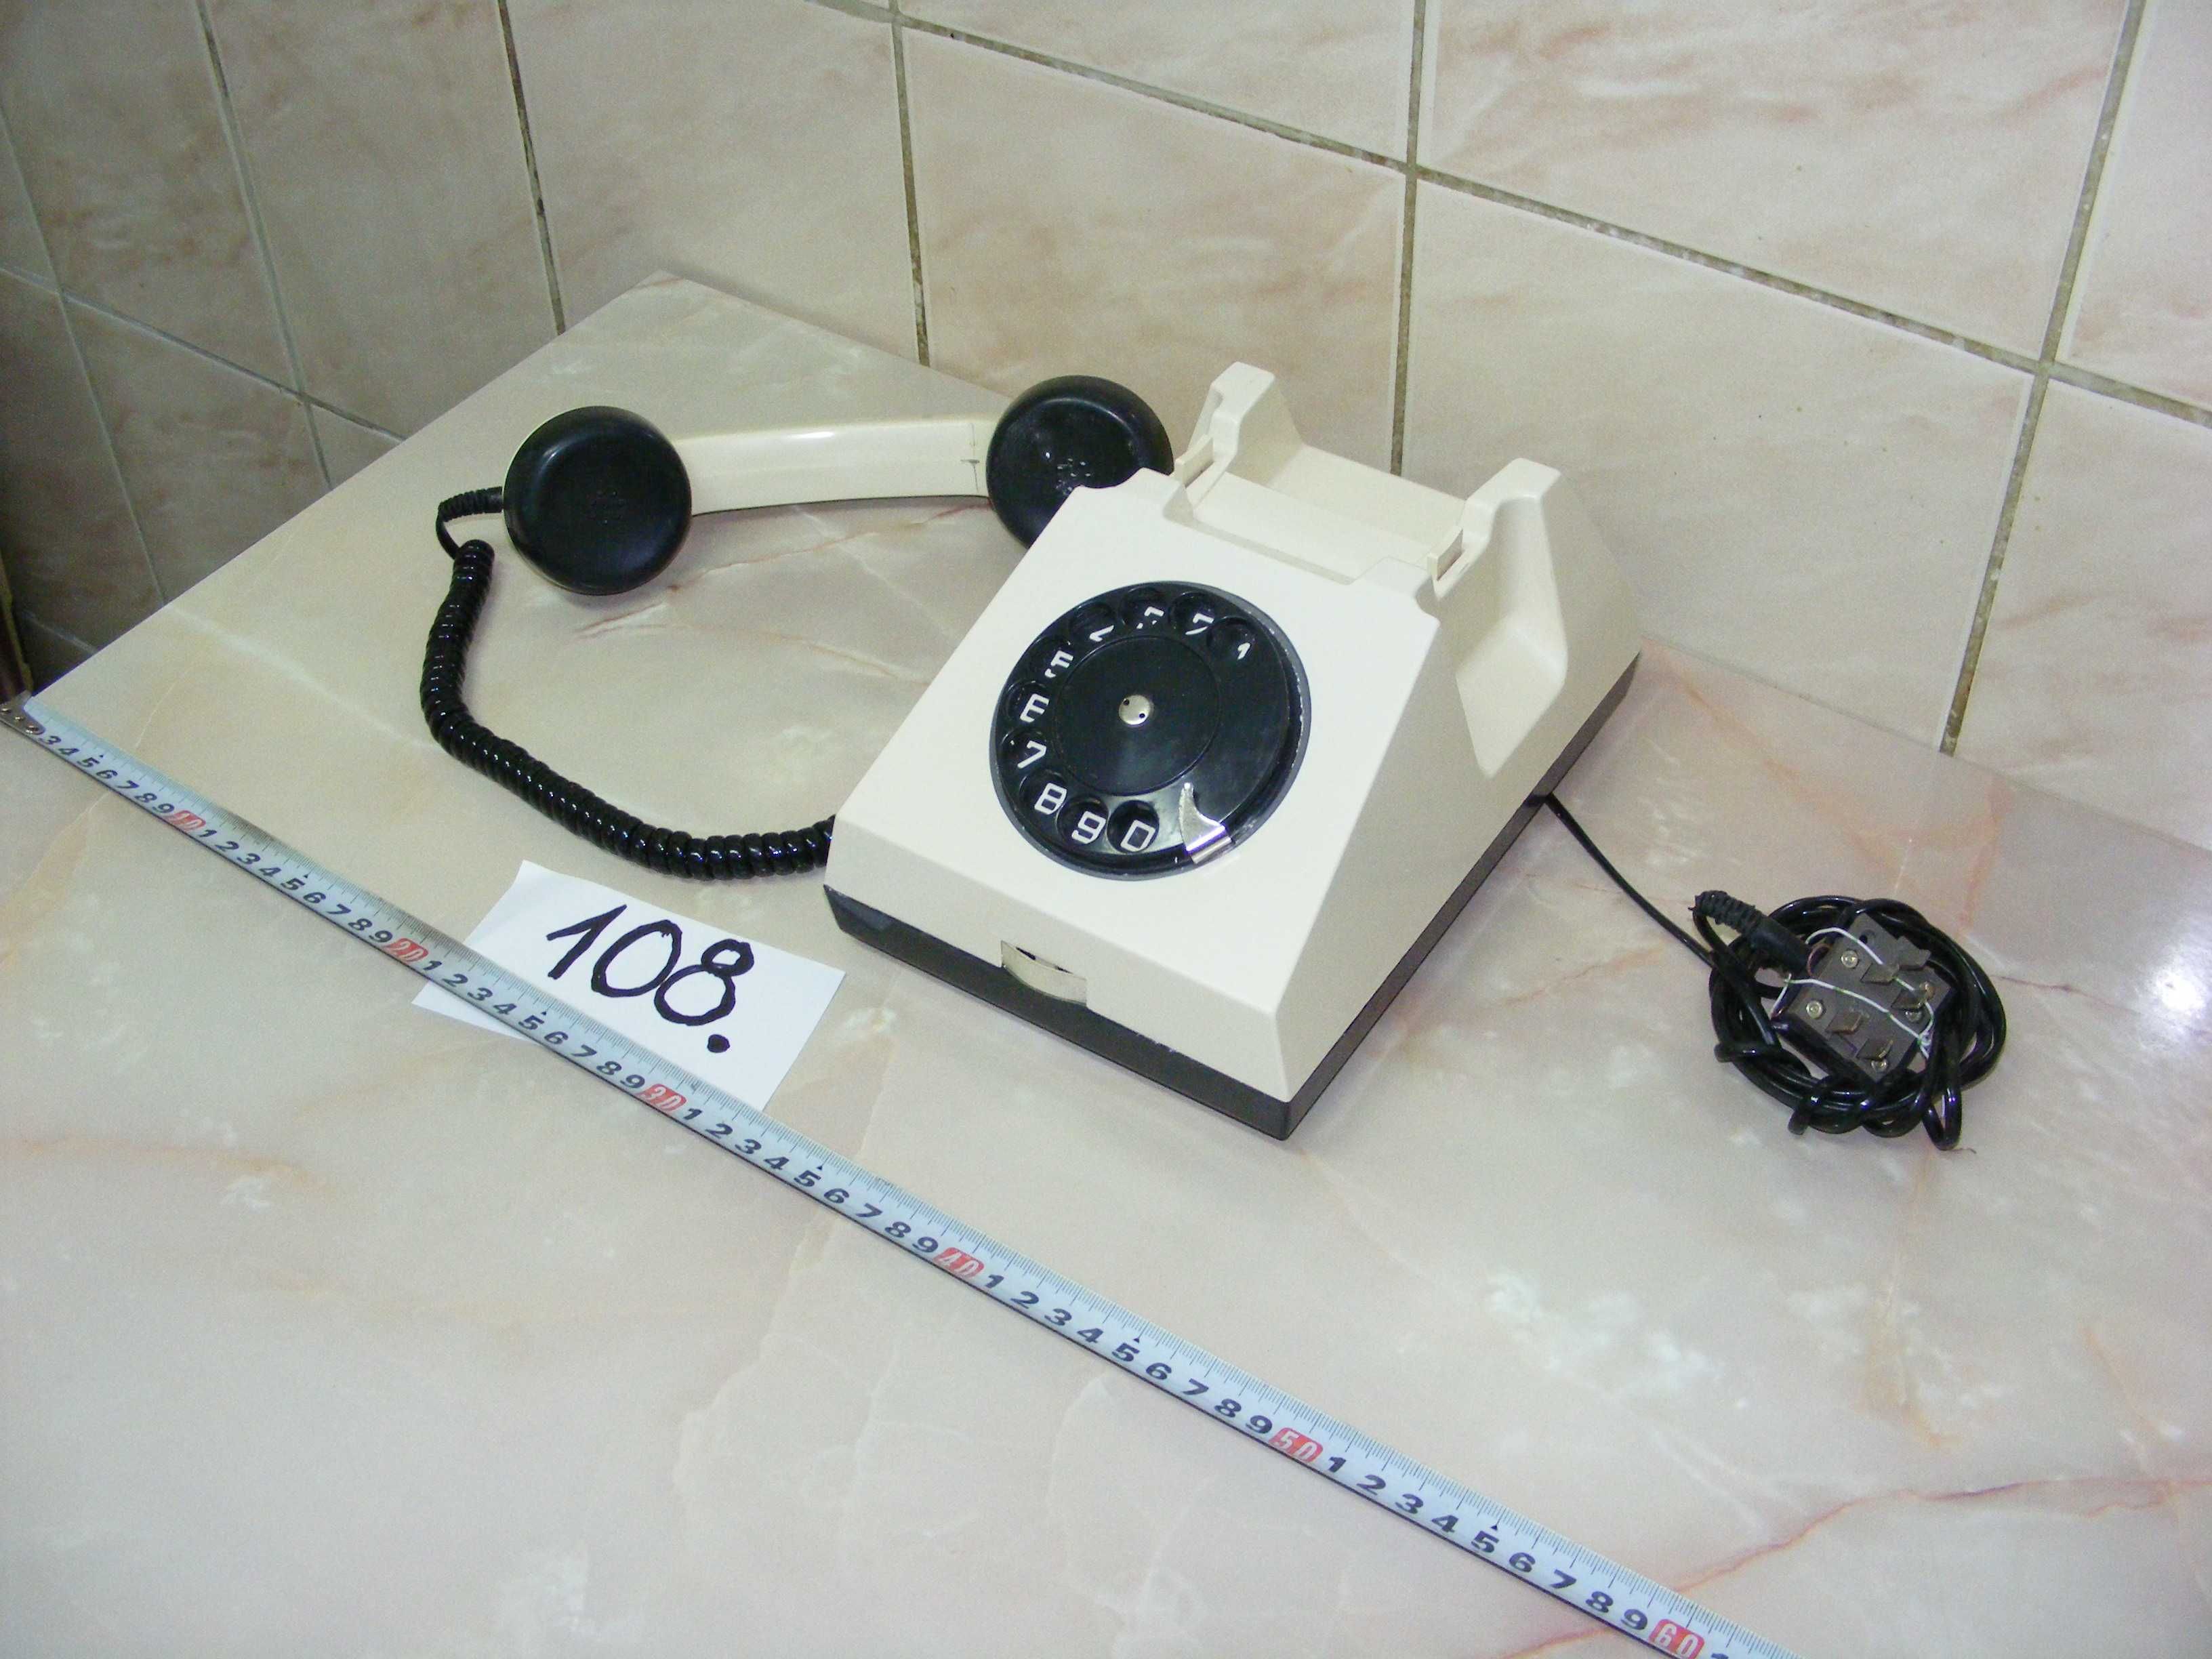 Telefon (cod 108)